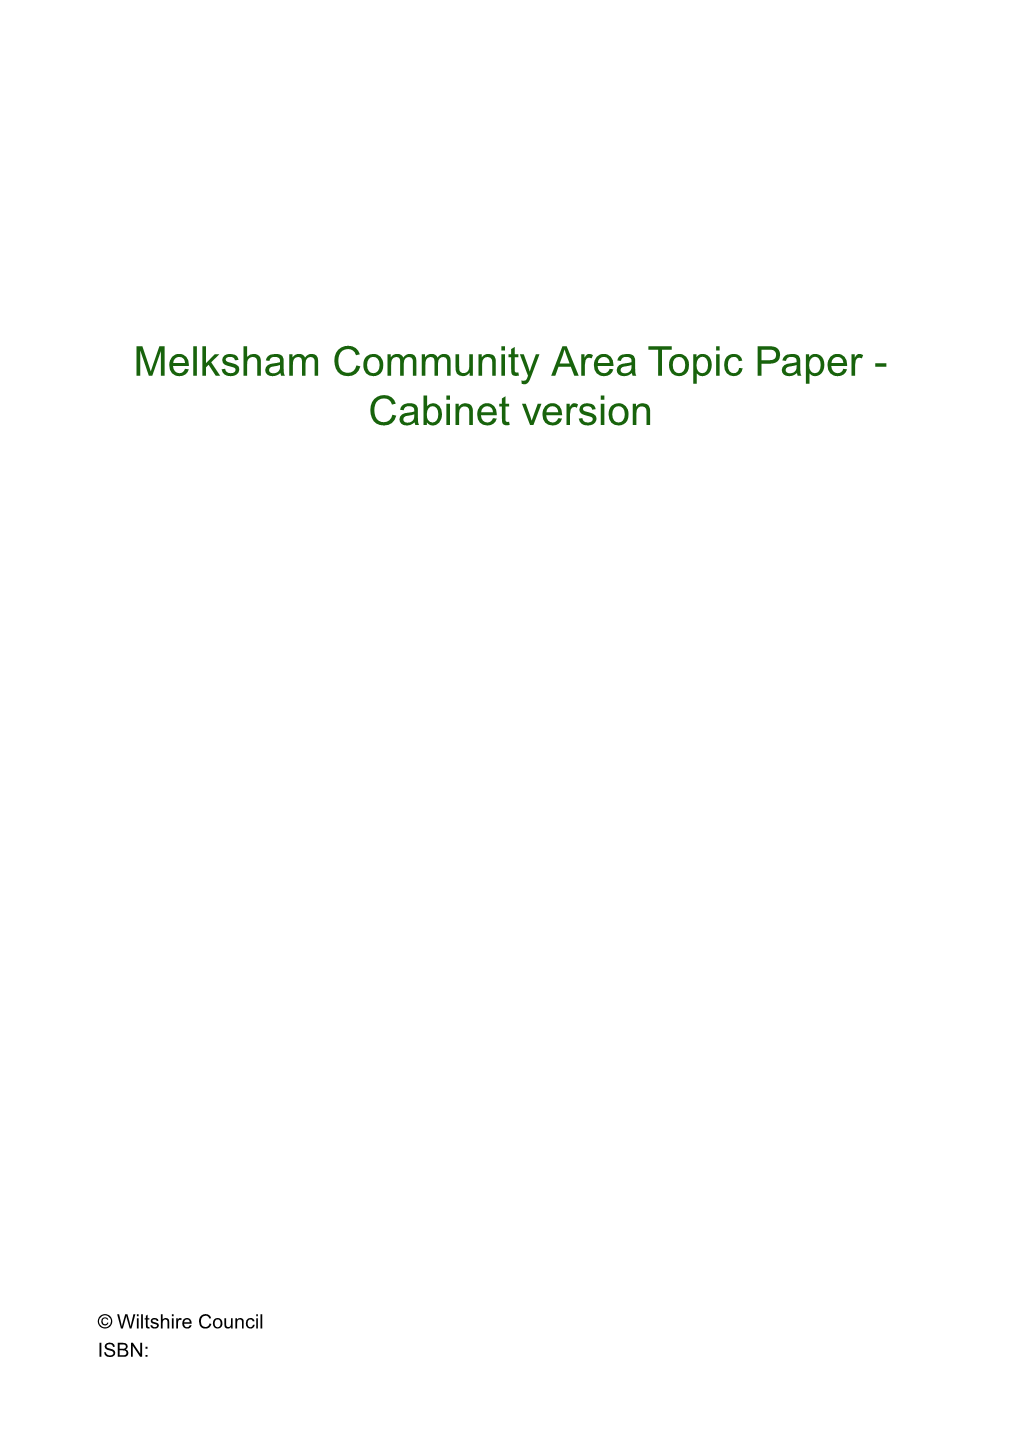 Melksham Community Area Topic Paper - Cabinet Version